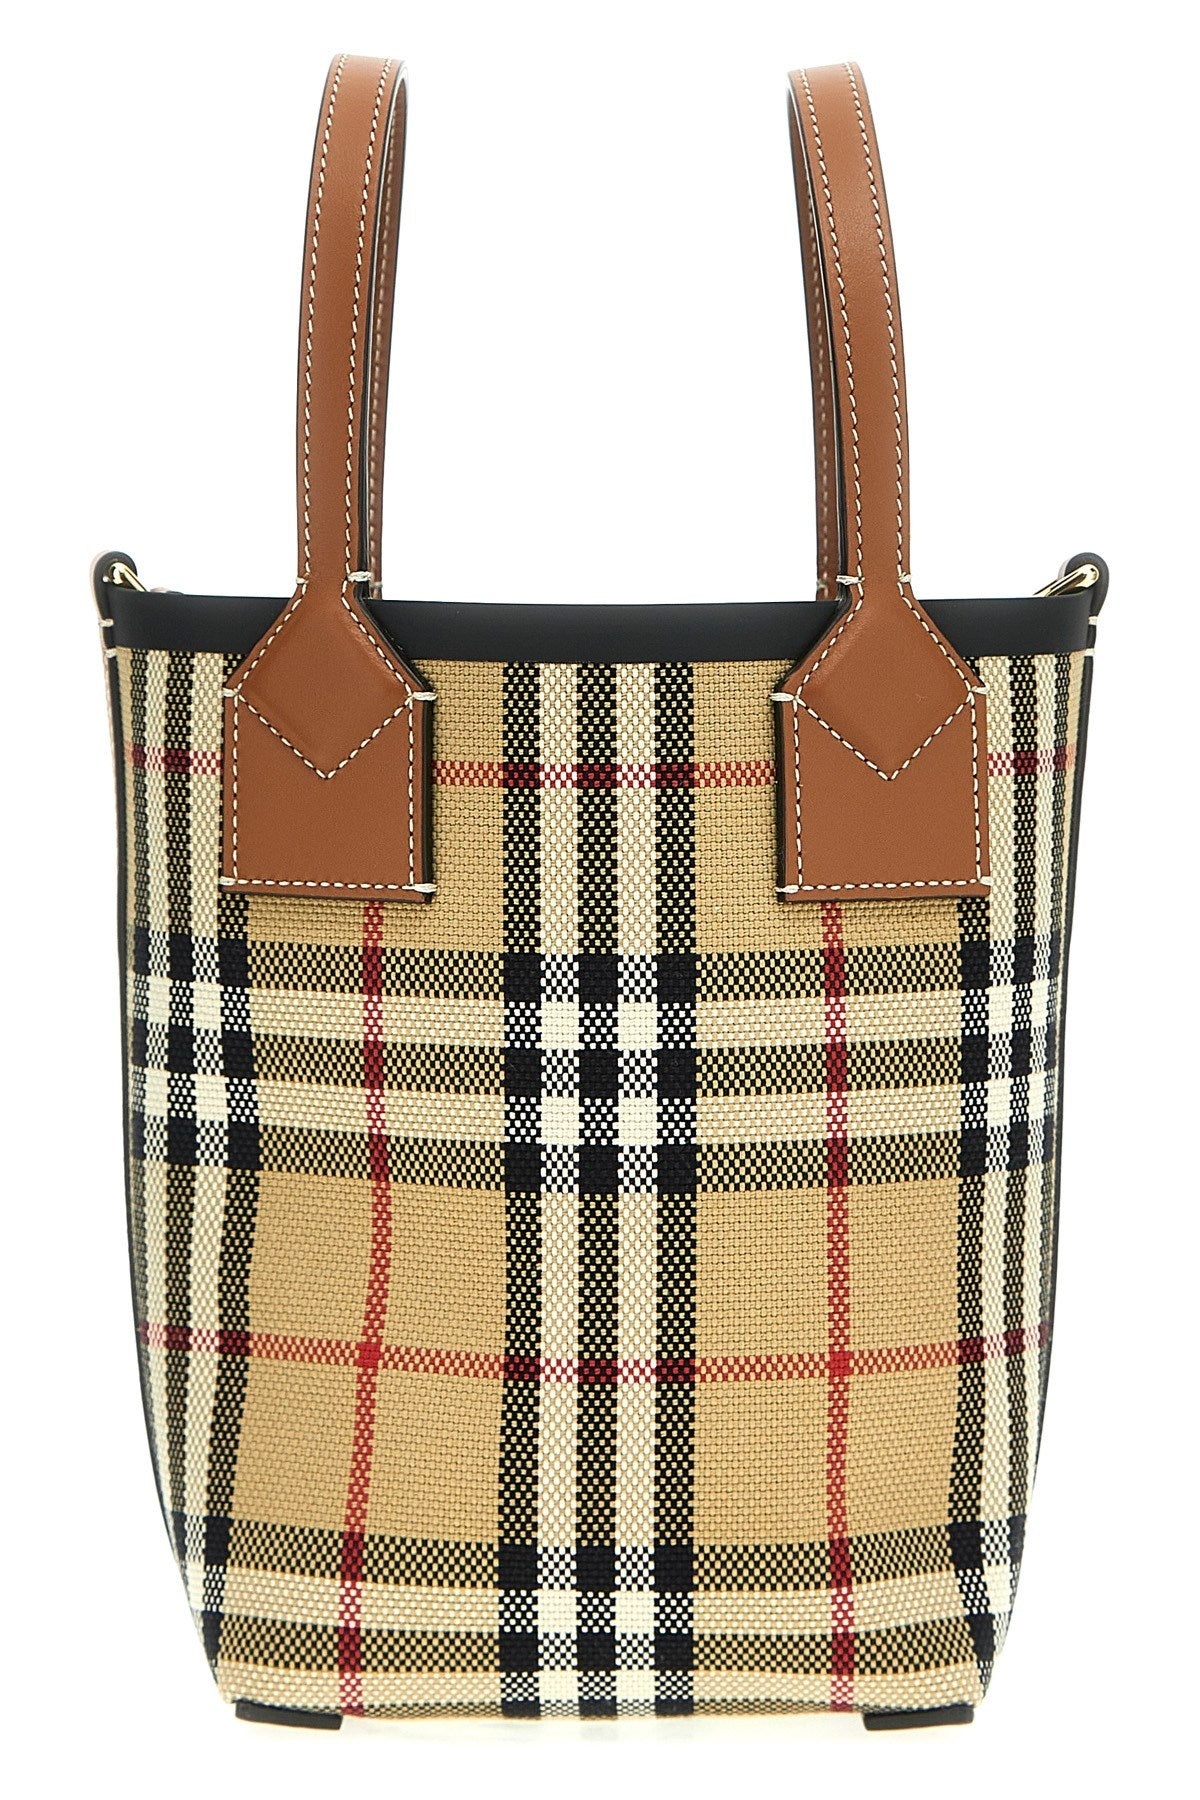 Burberry Women 'London Mini' Shopping Bag - 1